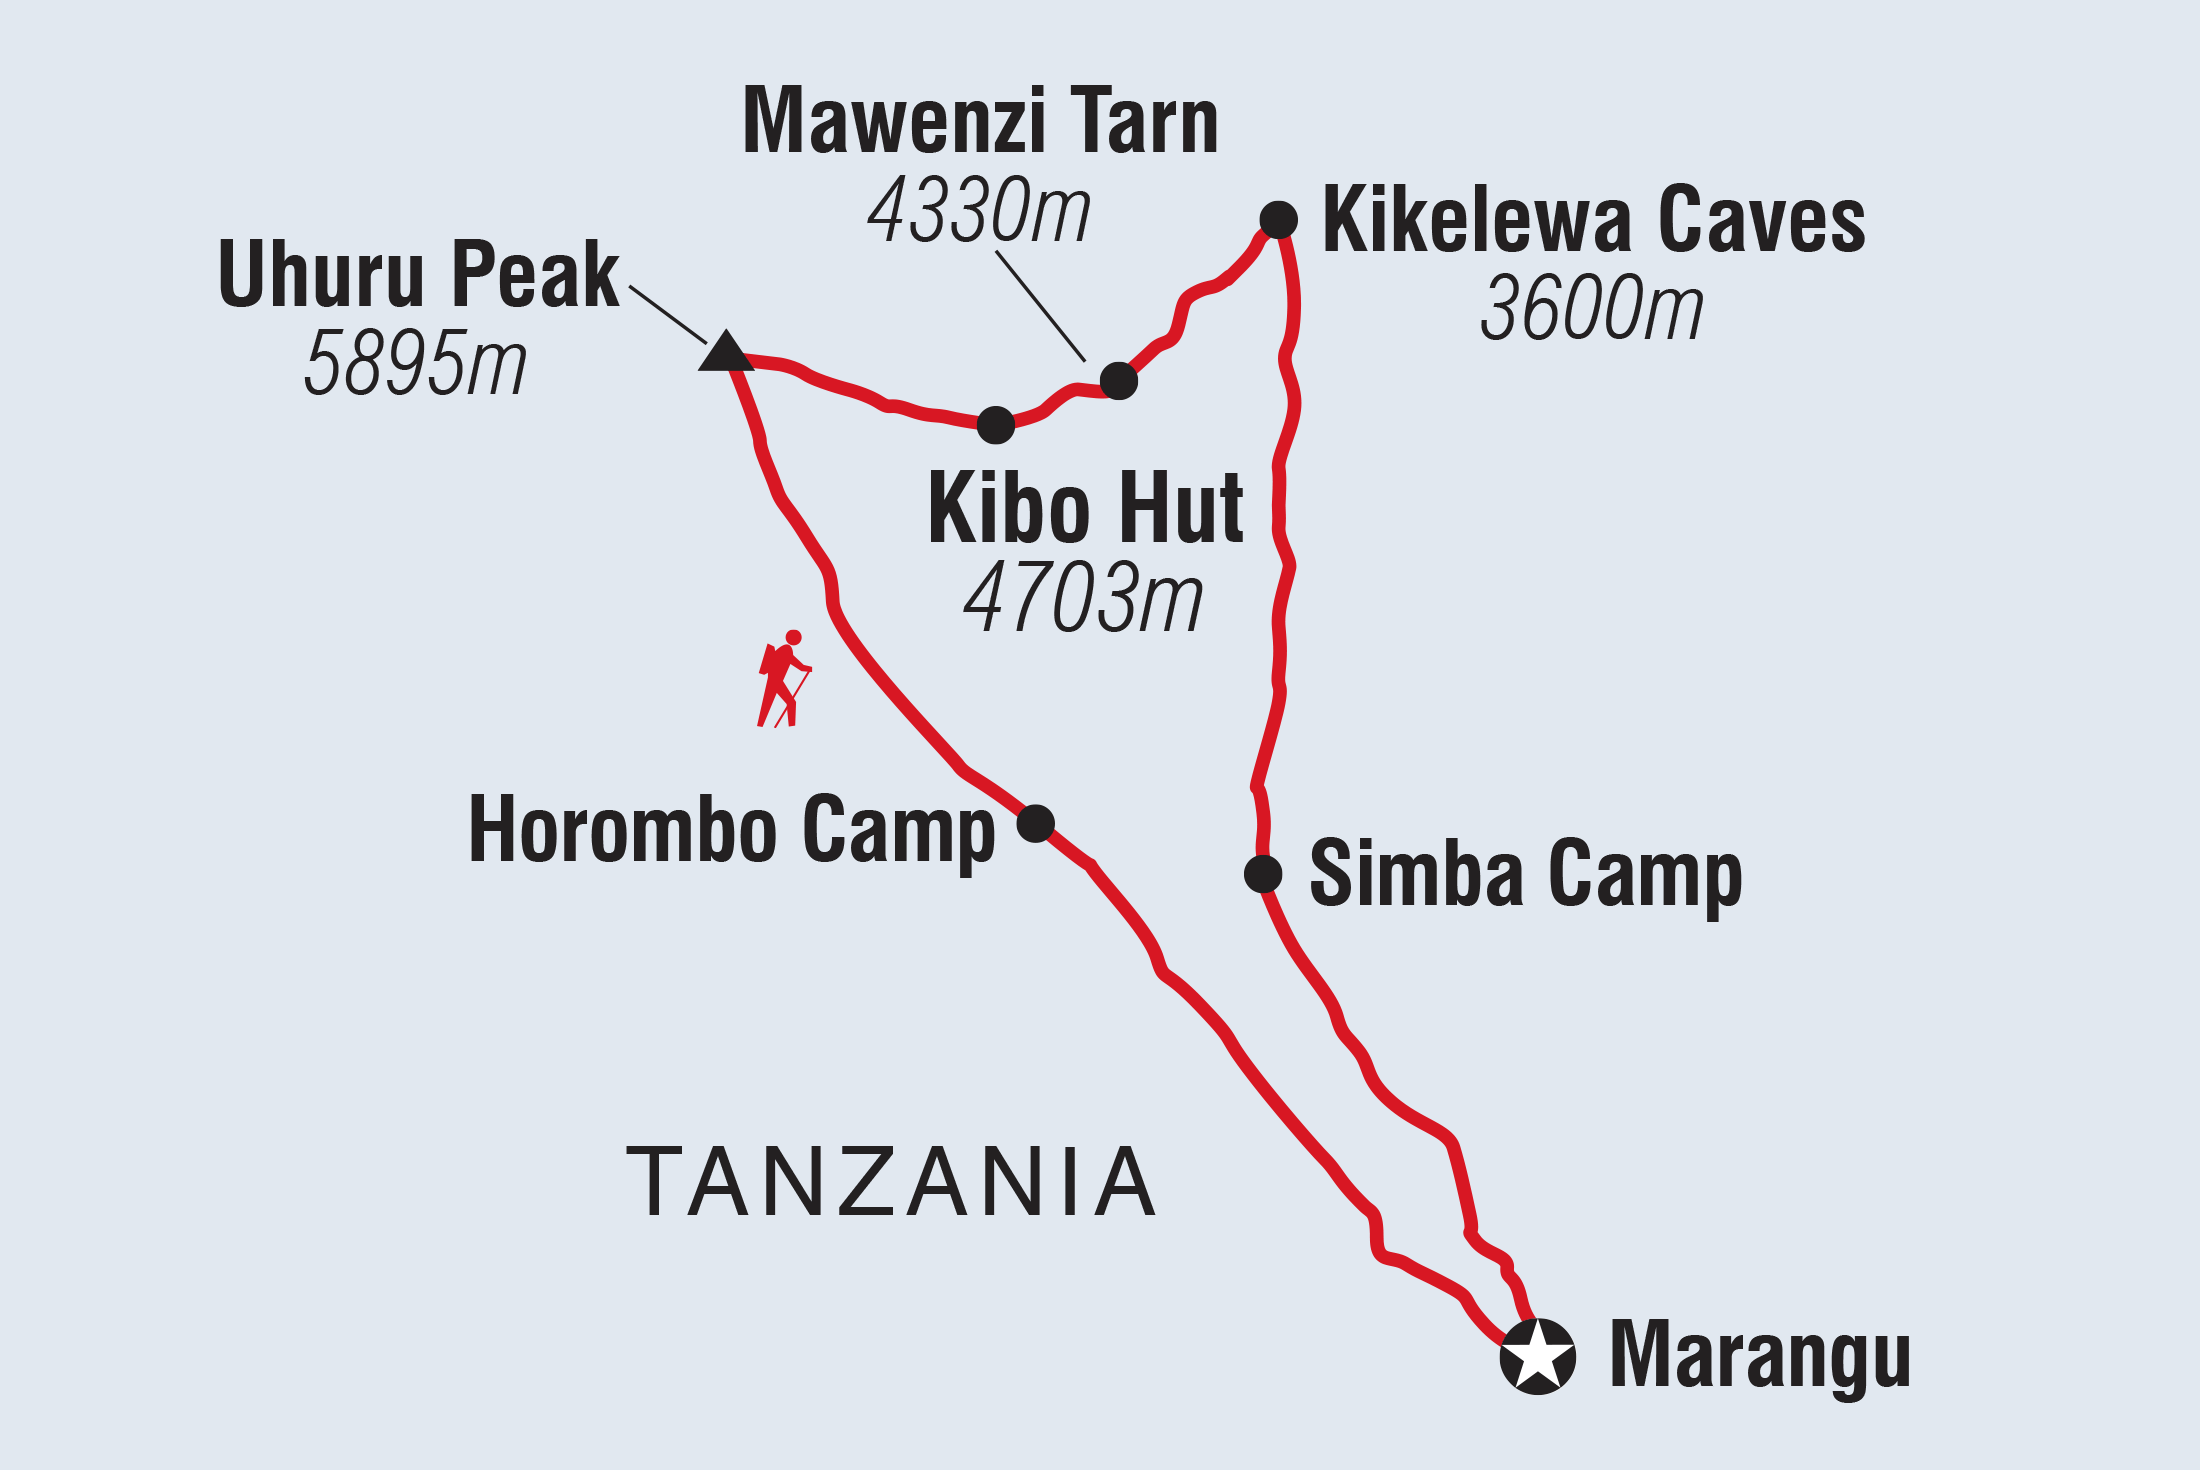 Map of Kilimanjaro: Rongai Route including Tanzania, United Republic Of